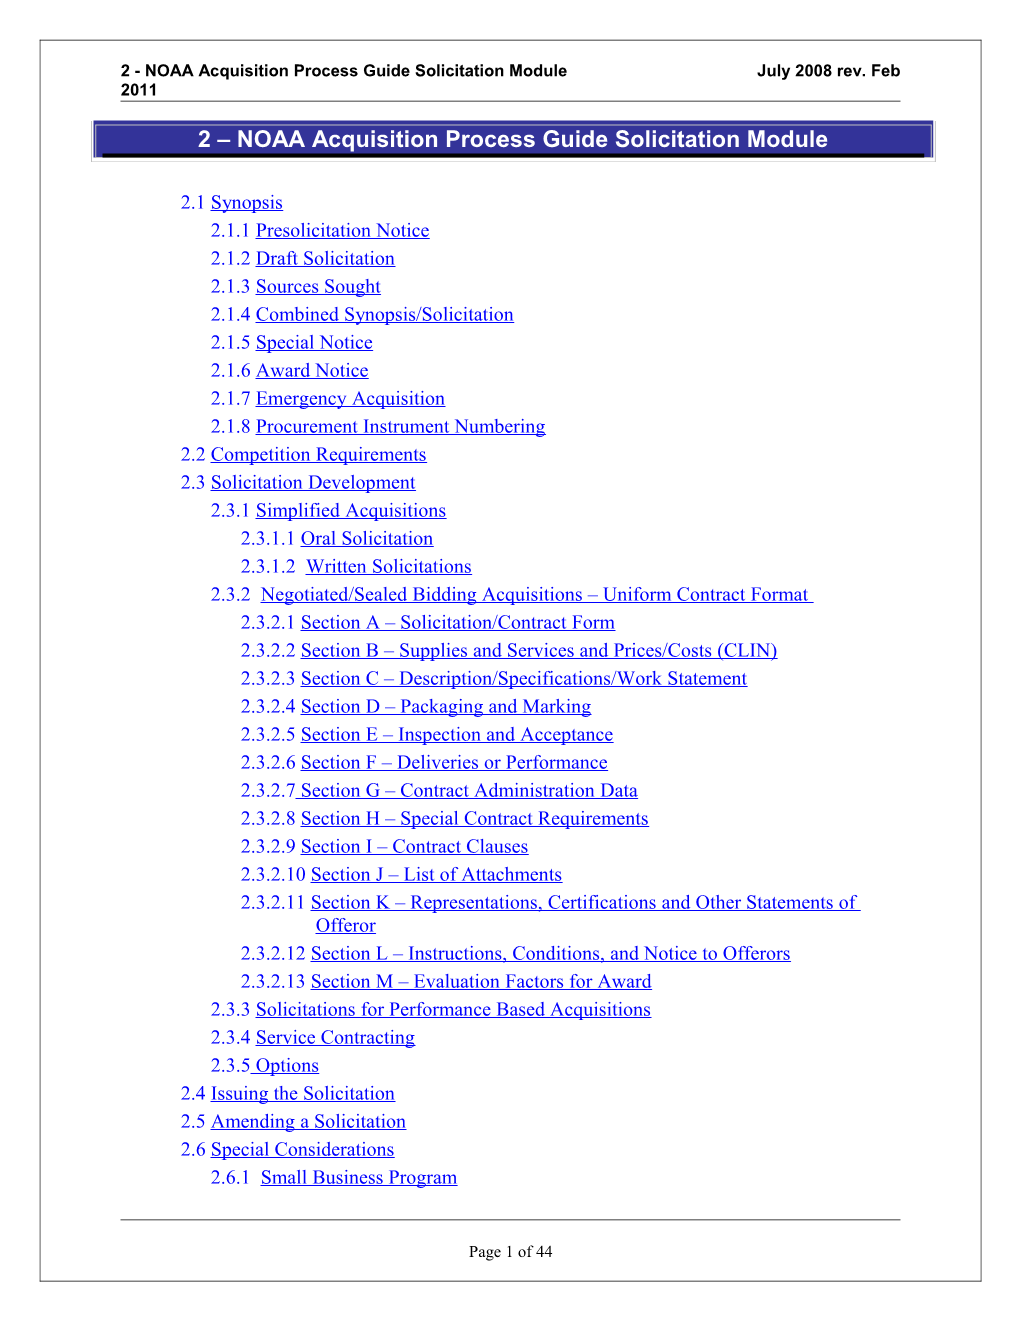 2 - NOAA Acquisition Process Guide Solicitation Module July 2008 Rev. Feb 2011